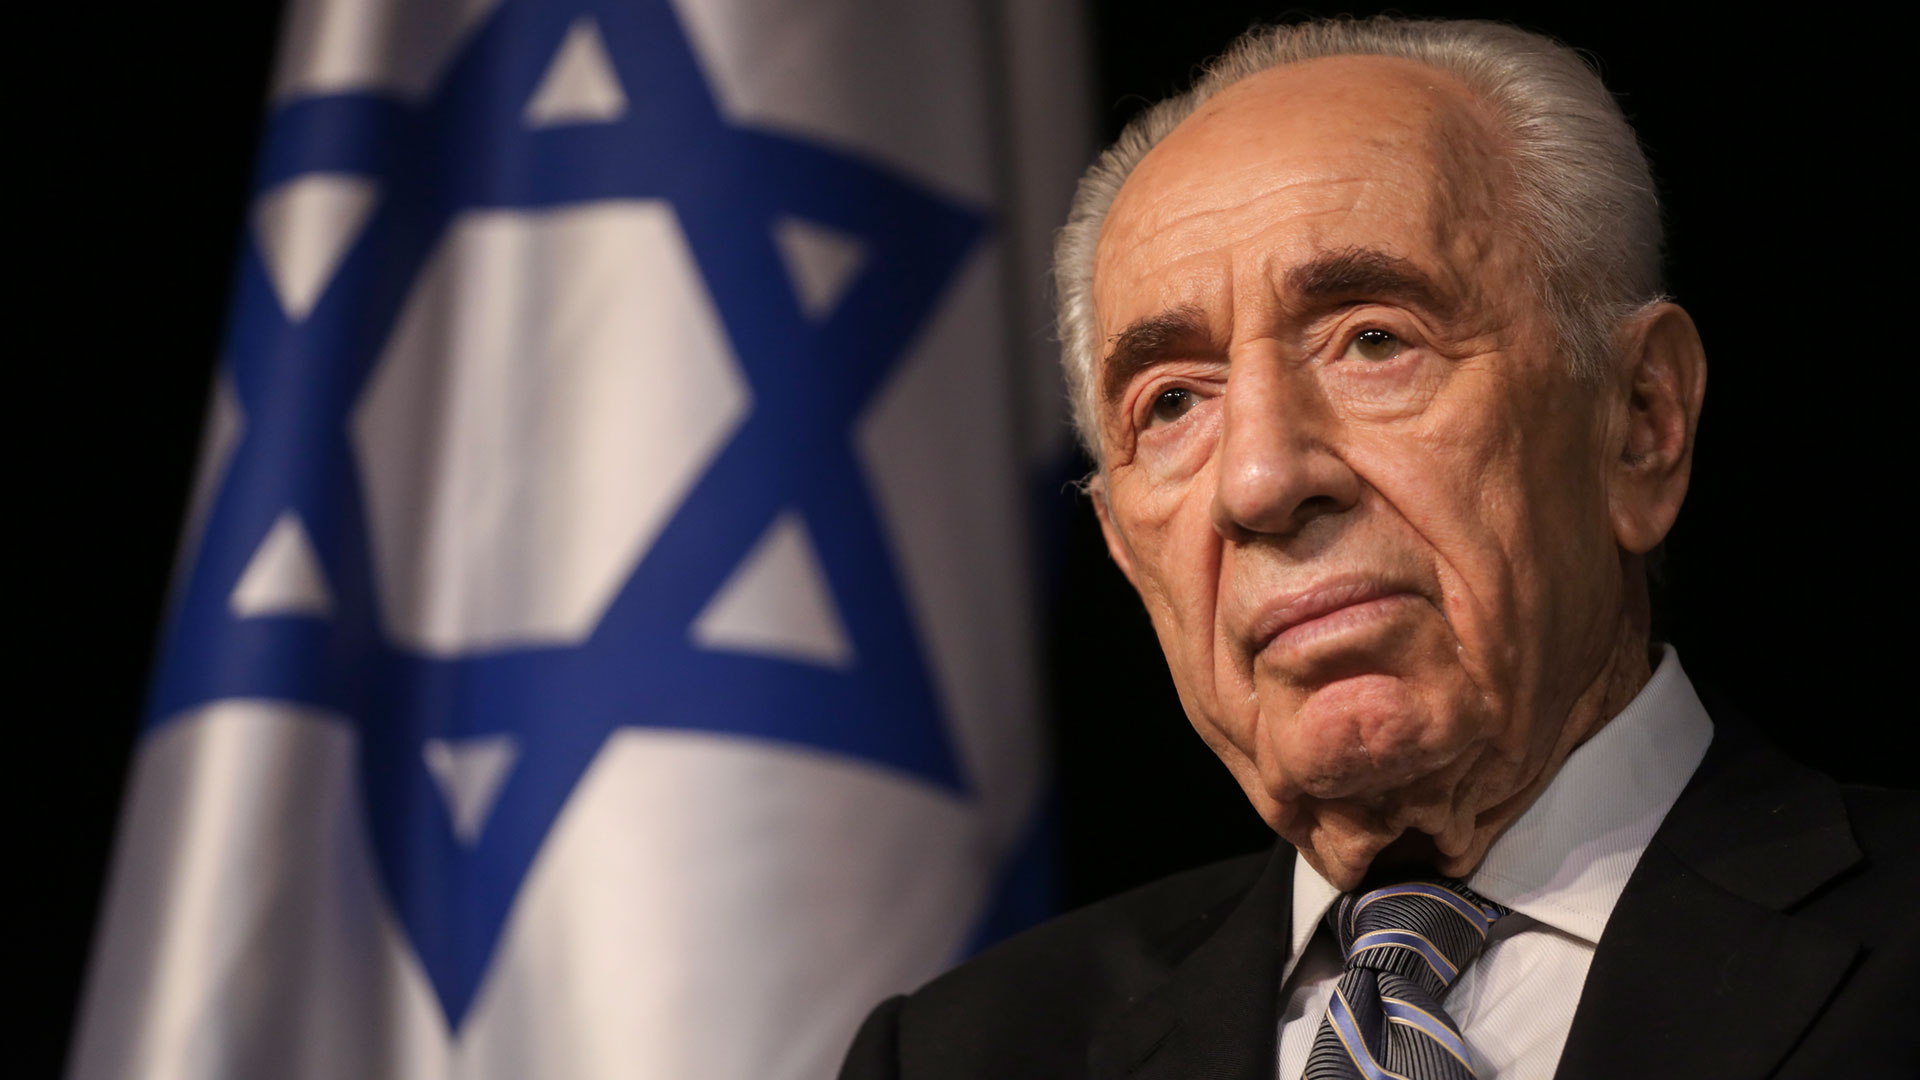 Former Israeli Prime Minister And President Shimon Peres Dies At 93